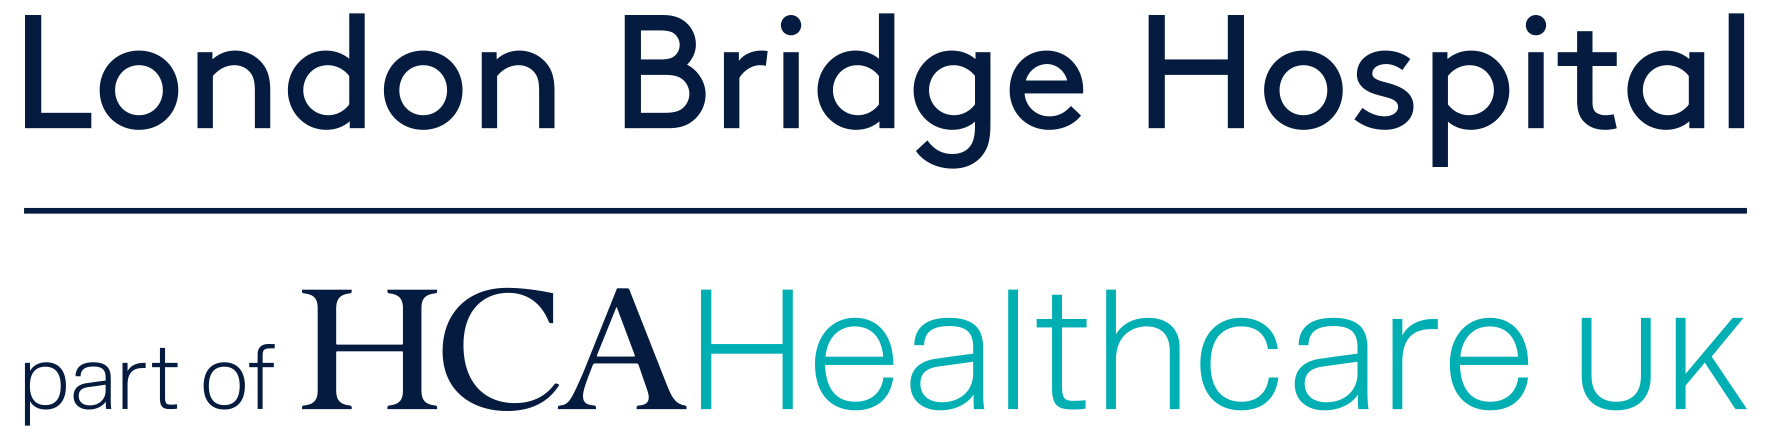 London-Bridge-Hospital